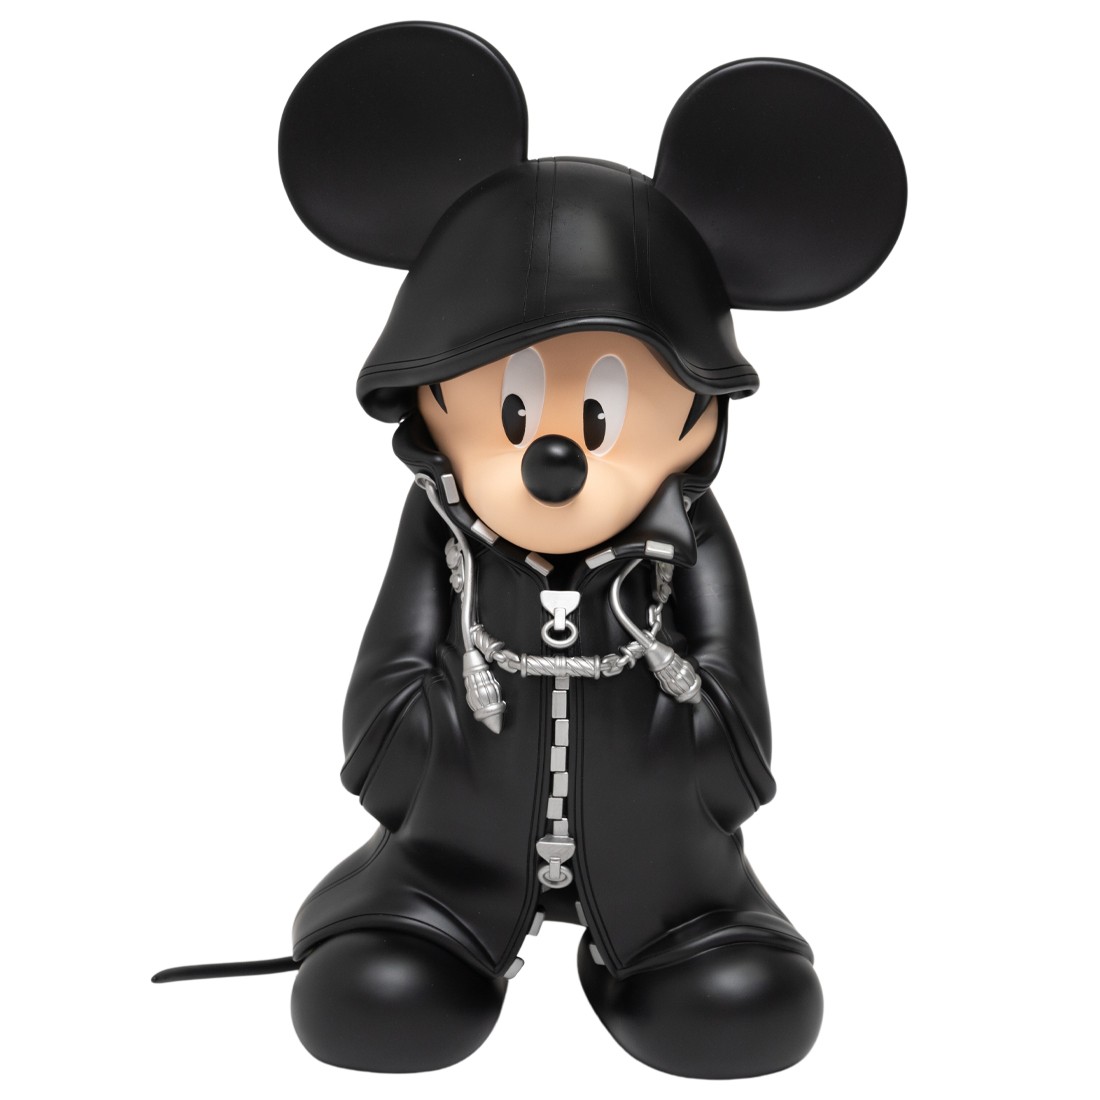 Kingdom Hearts King Mickey 13-Inch Statue